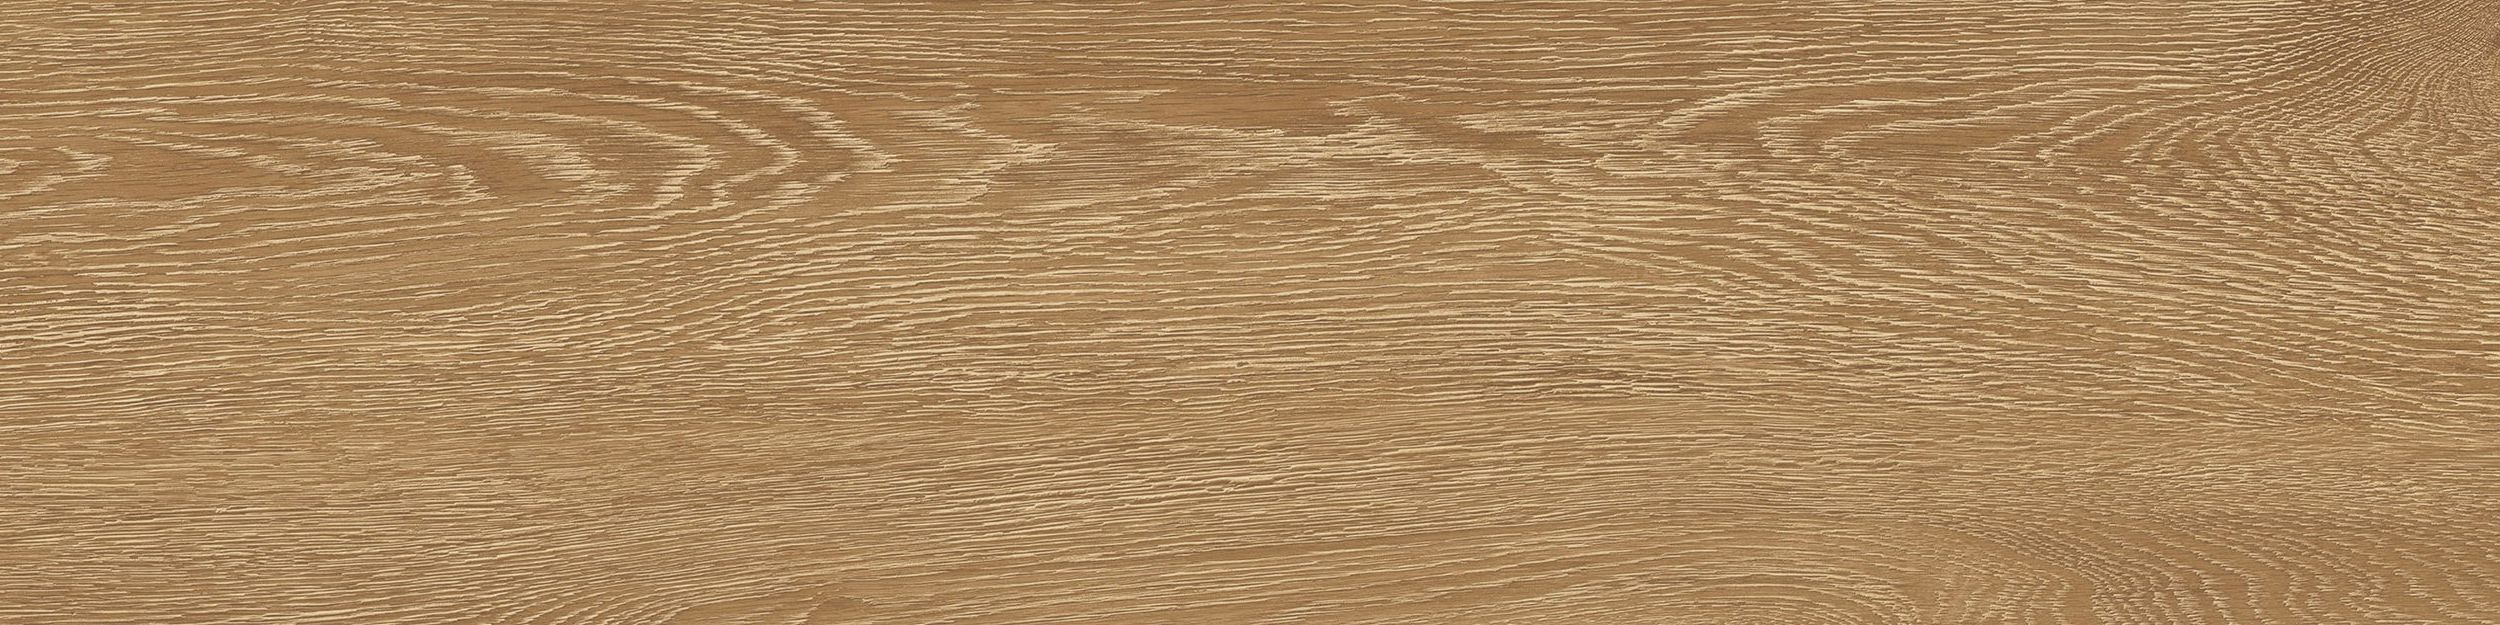 Textured Woodgrains LVT In Antique Oak imagen número 1